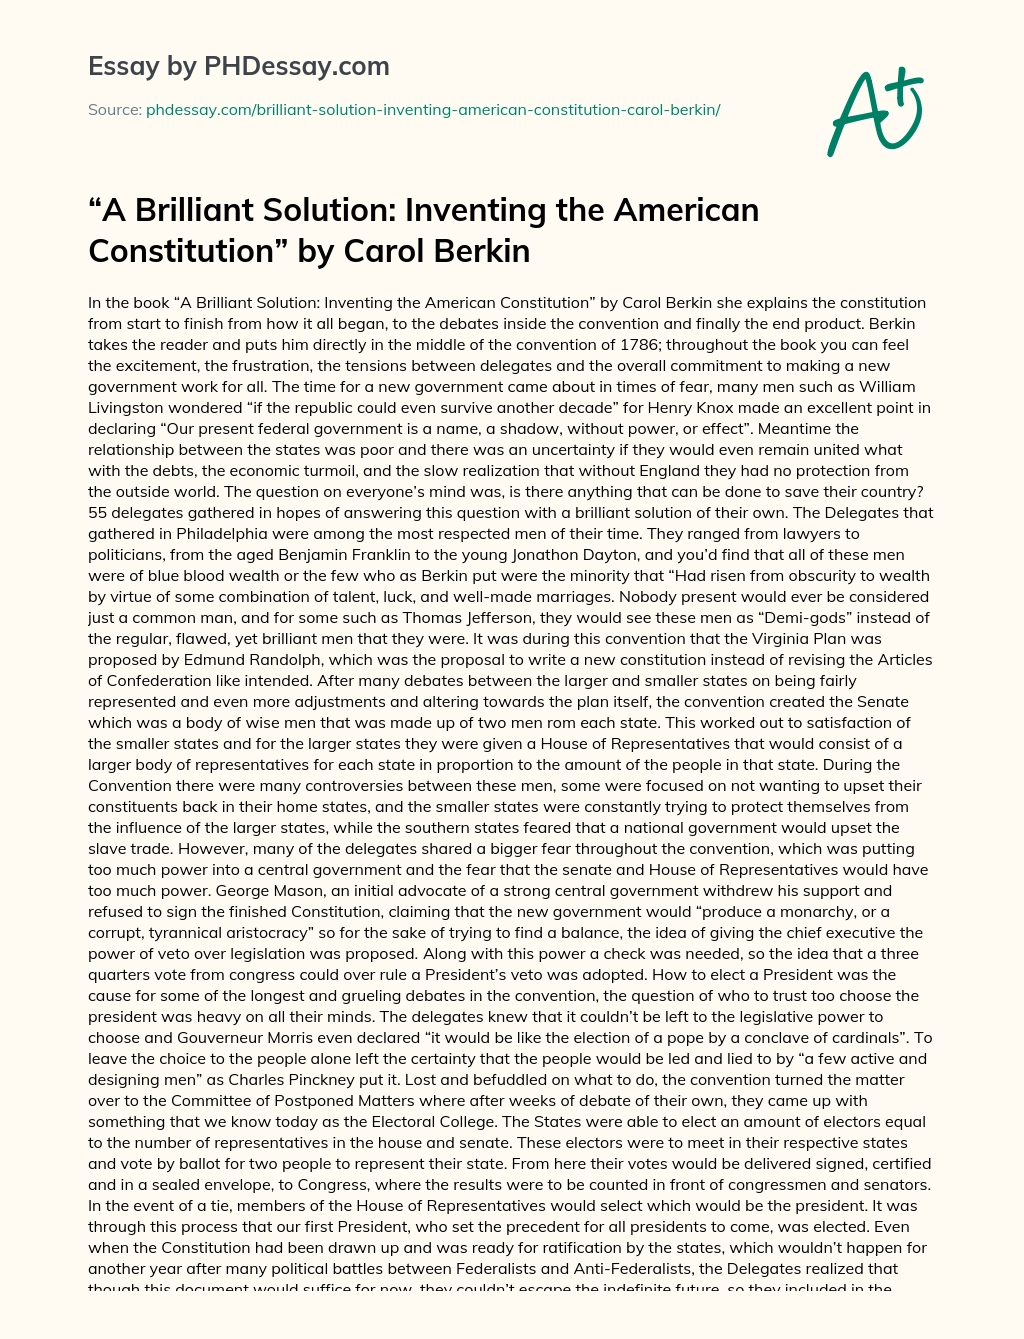 A Brilliant Solution: Inventing the American Constitution by Carol Berkin essay